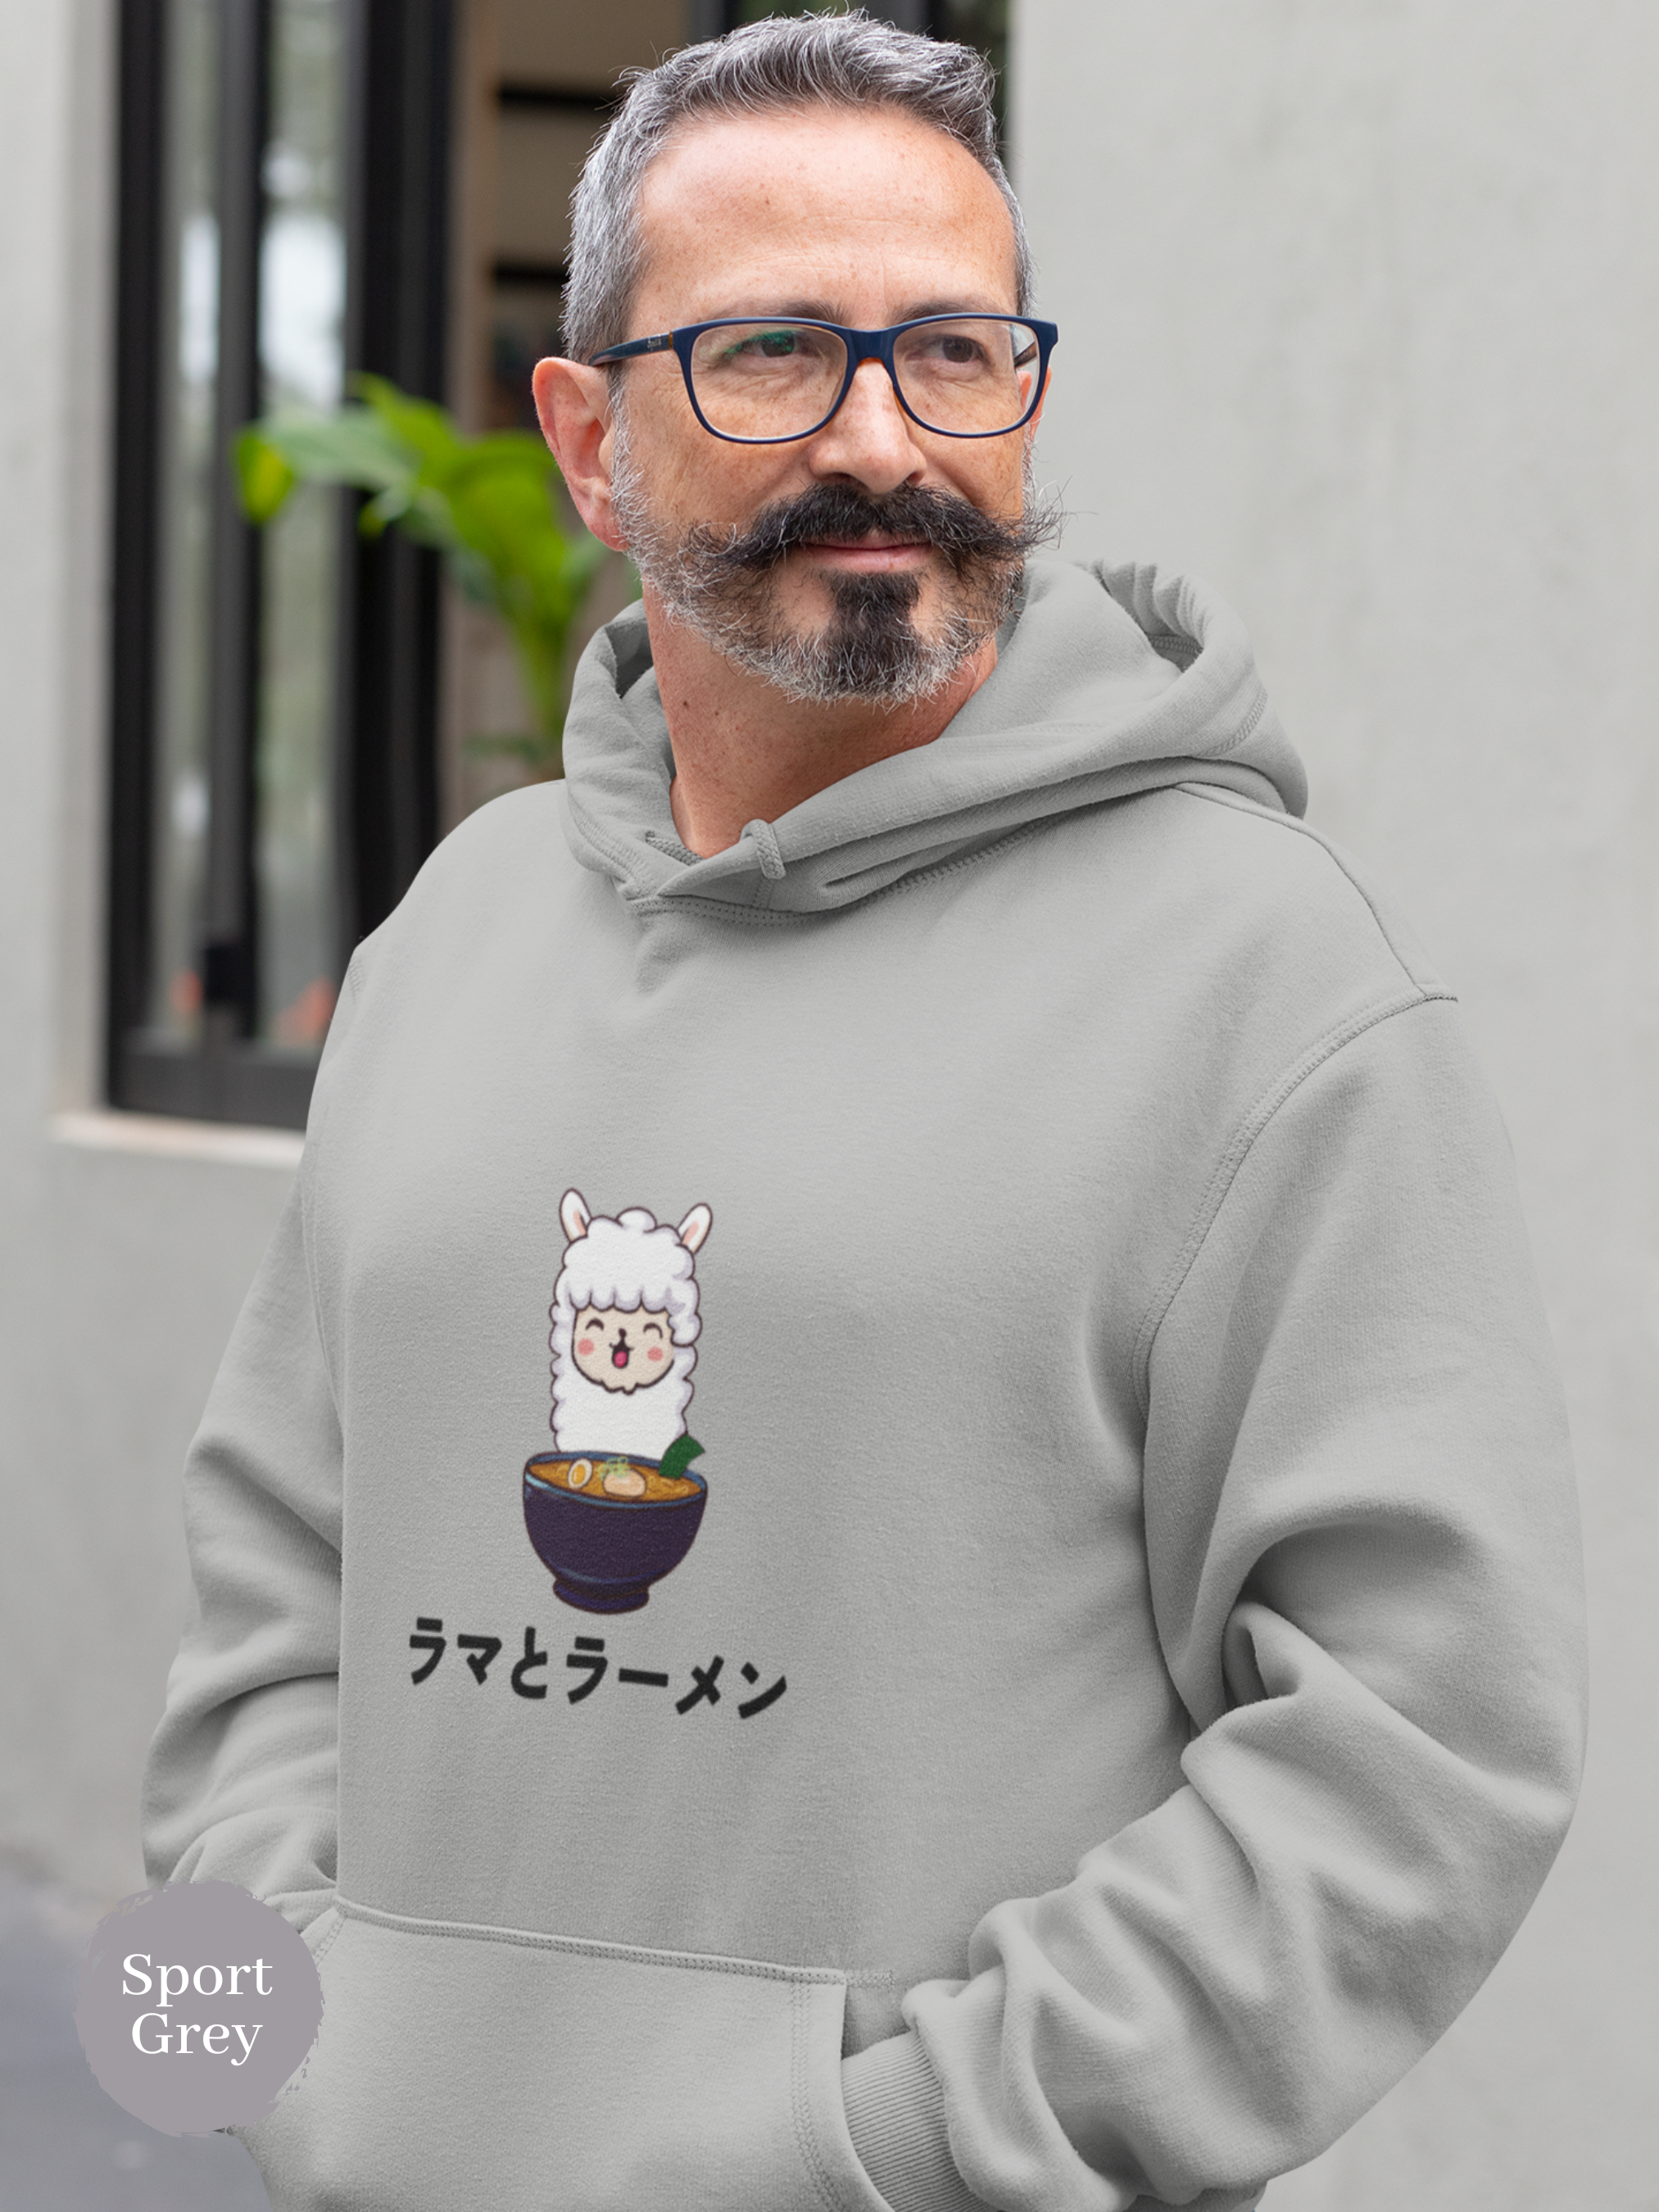 Ramen Hoodie: "Llama Noodle Love" Ramen Sweatshirt with Llama Illustration for Foodie and Ramen Art Fans